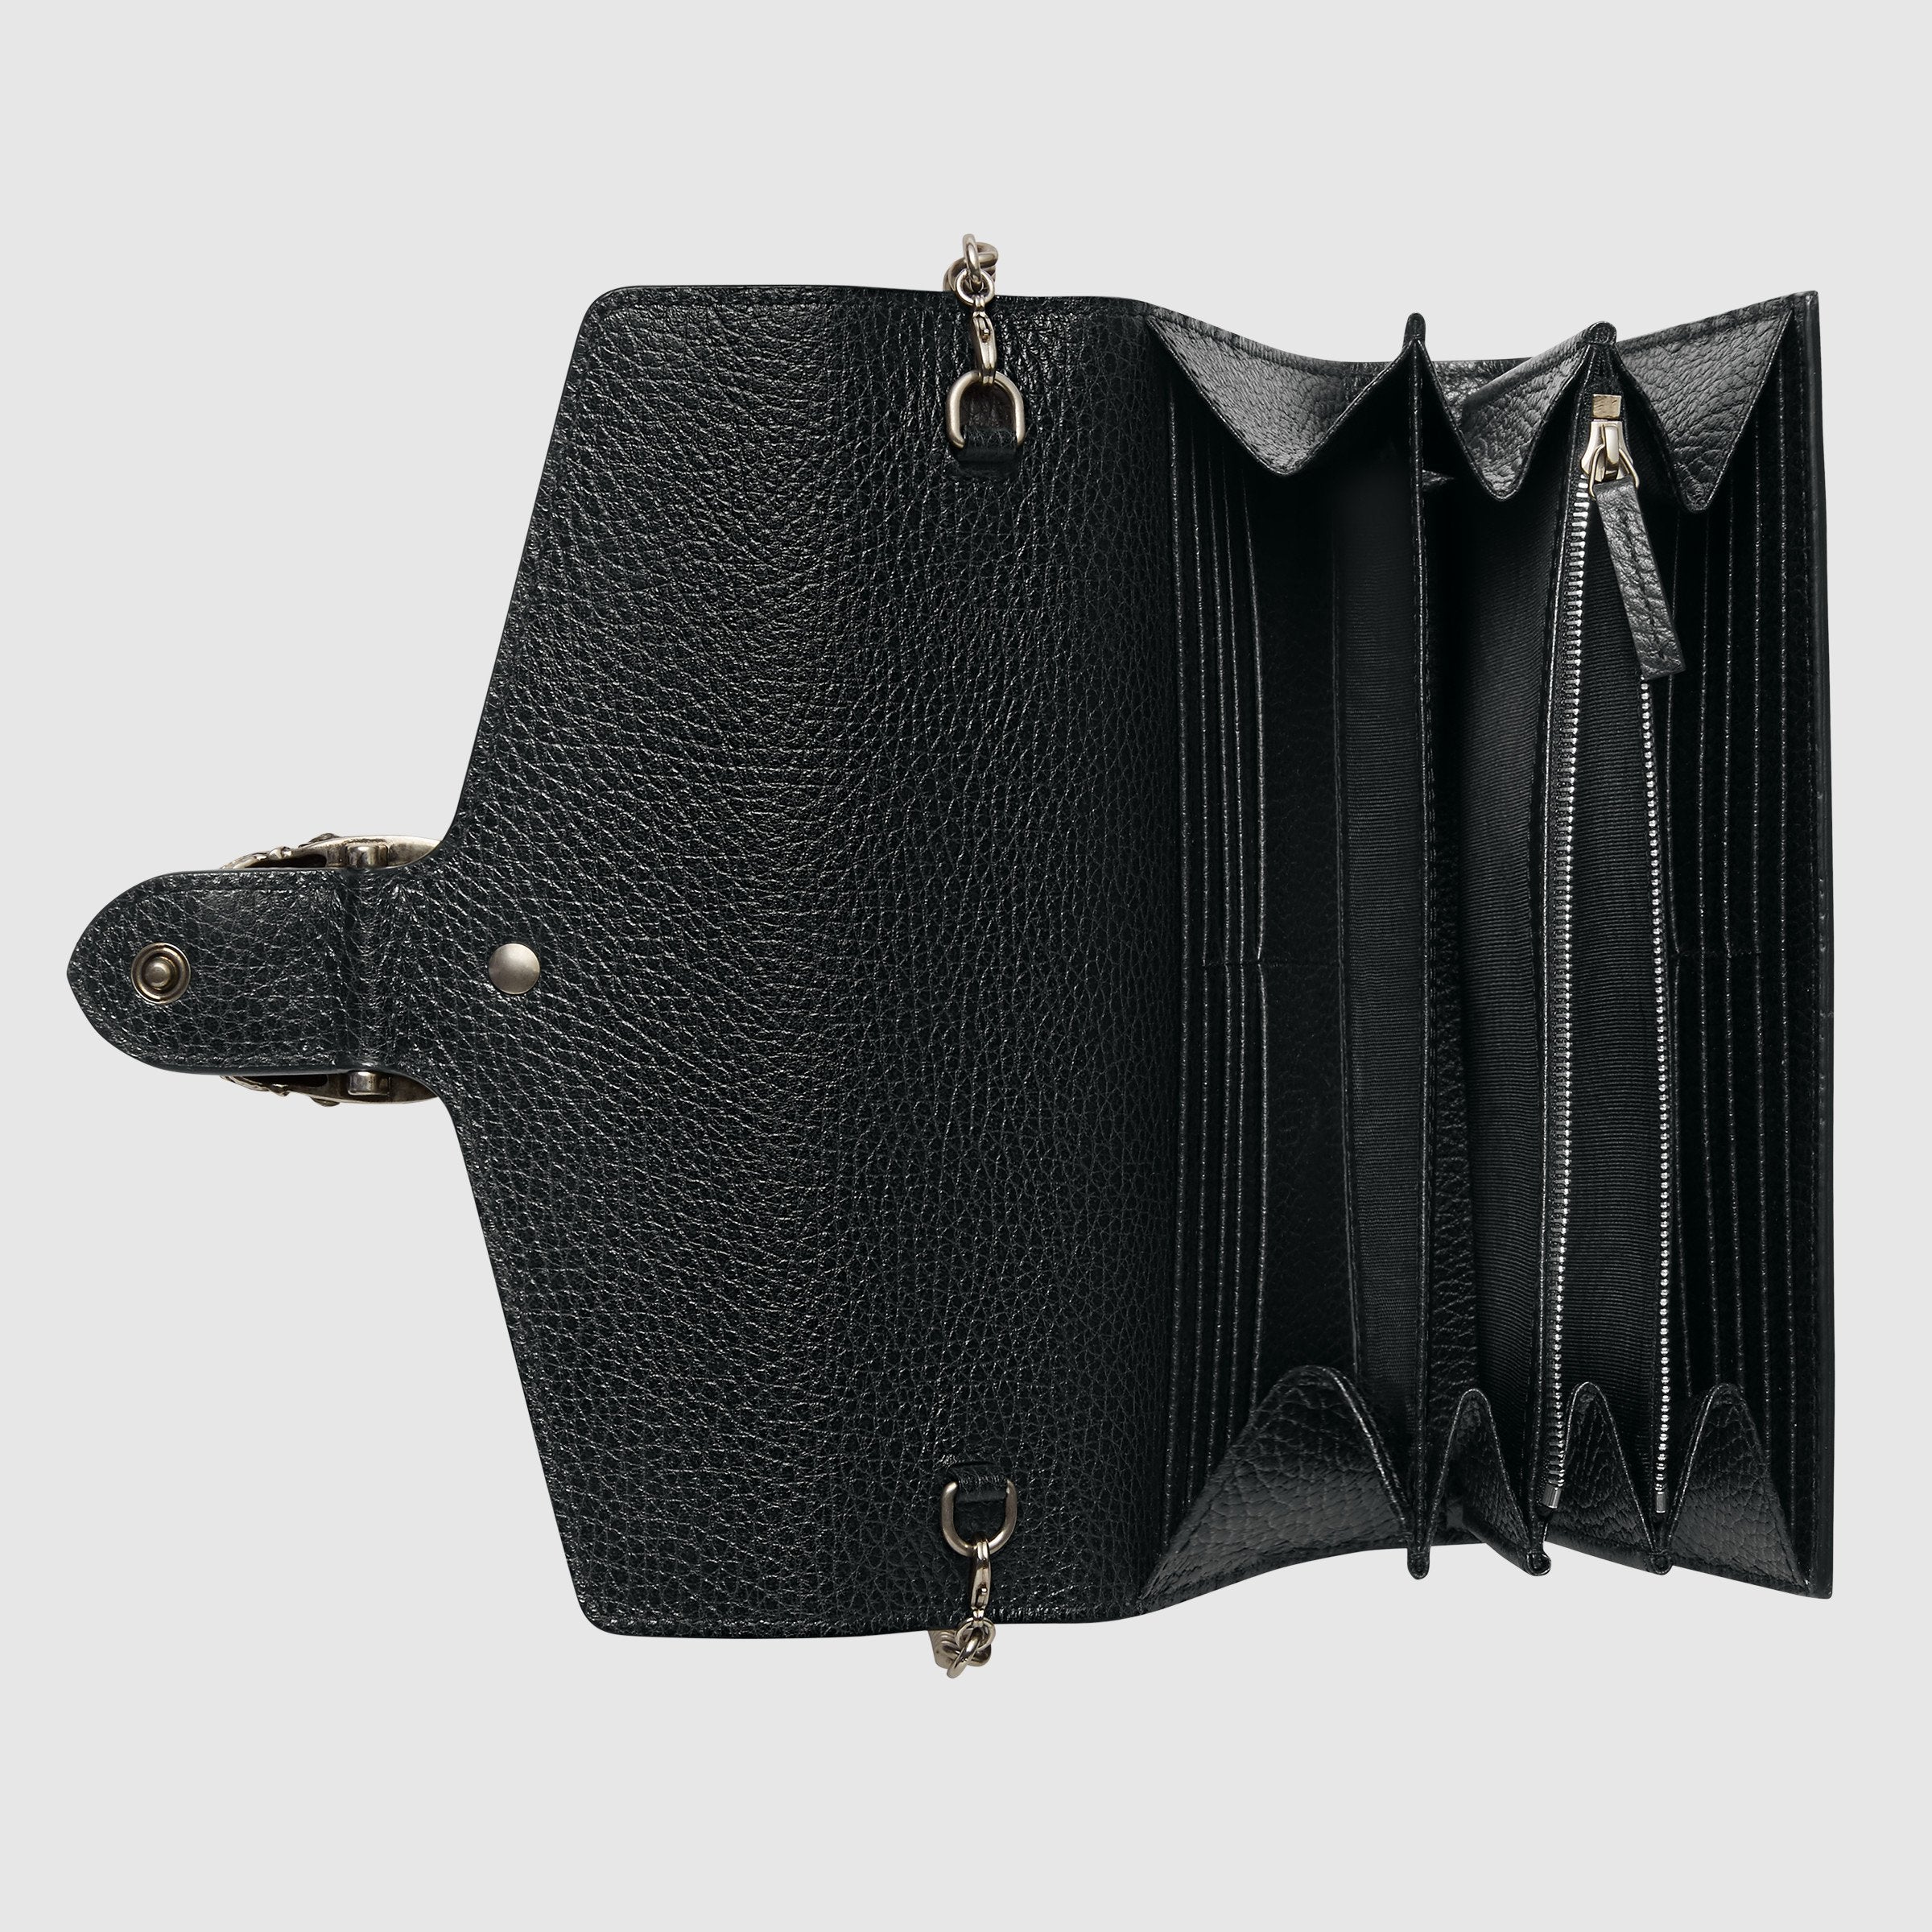 Gucci Dionysus GG Supreme Mini Leather Chain Bag Black